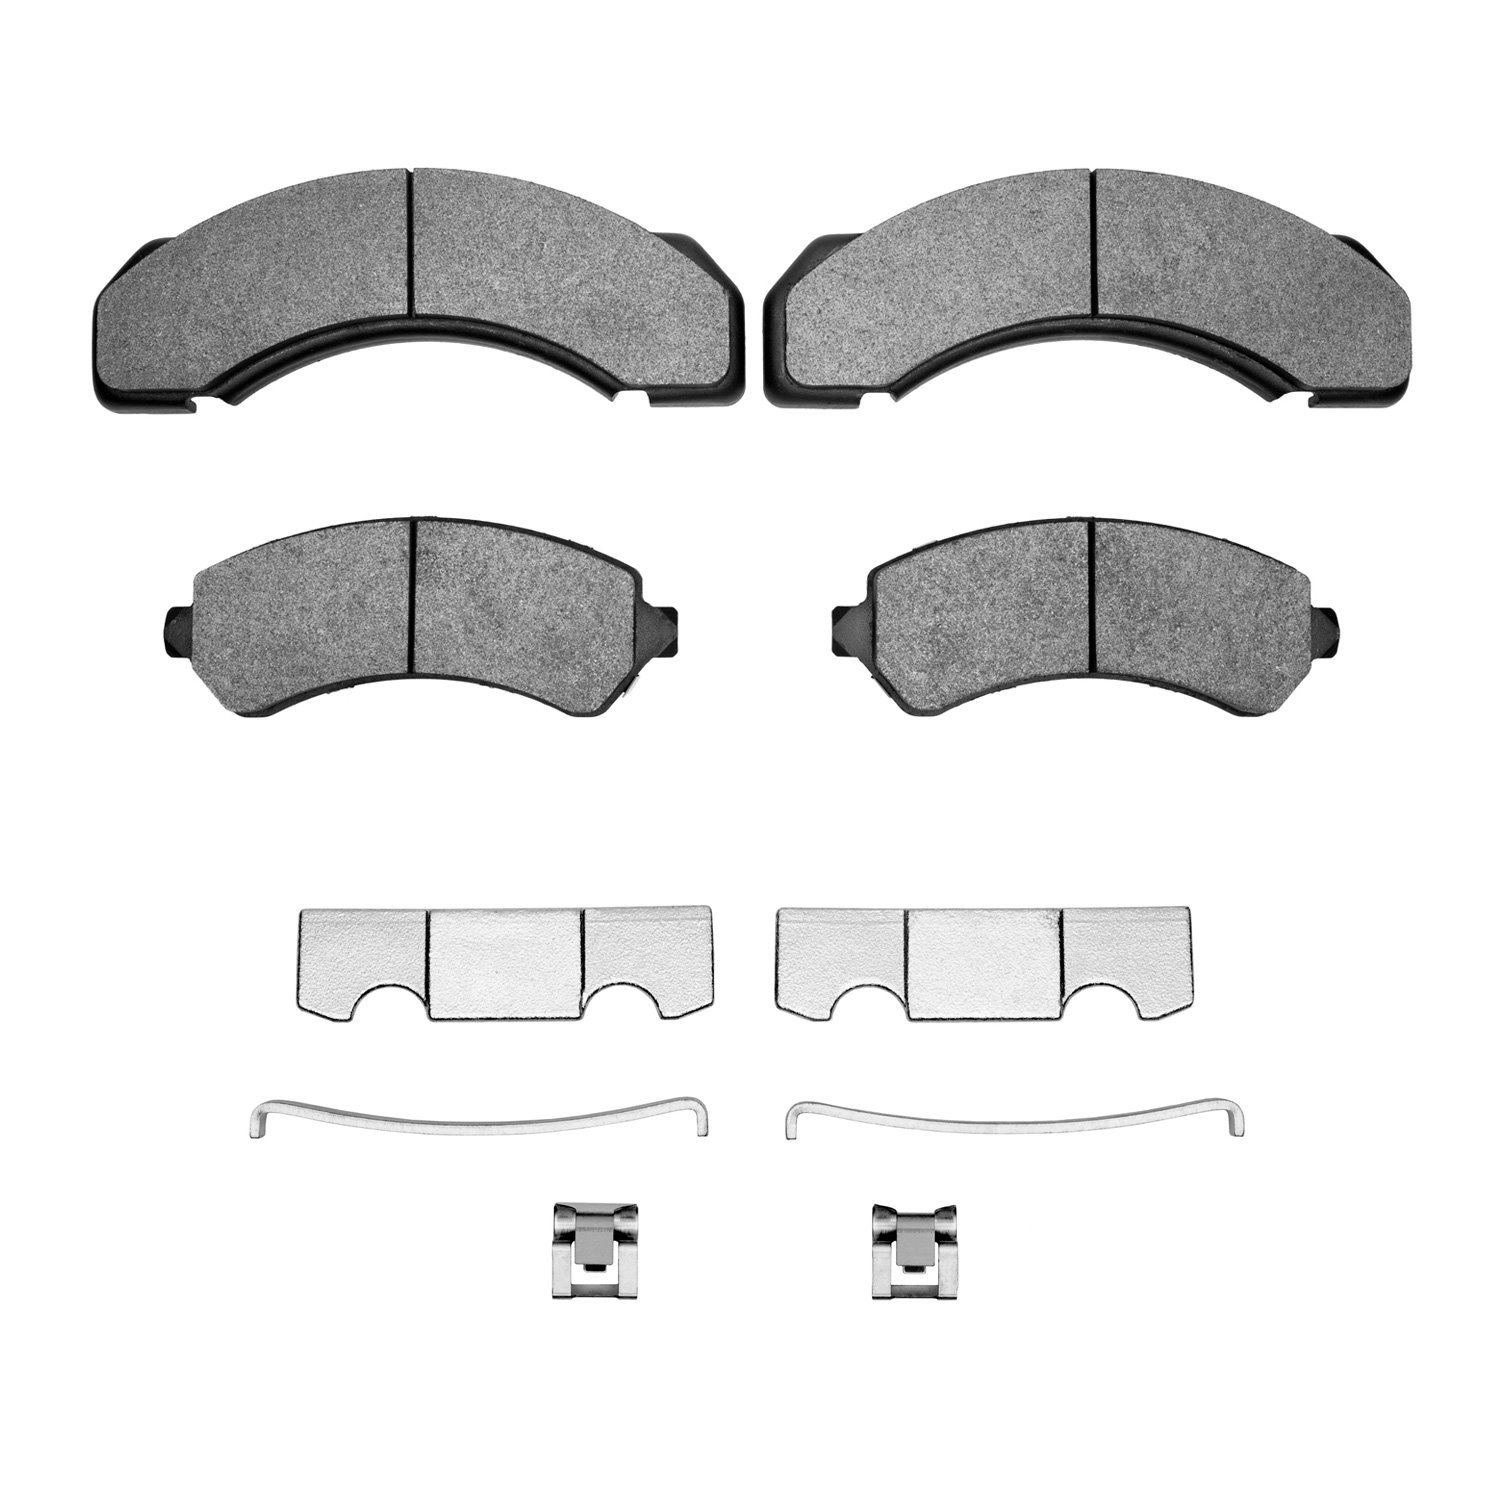 Semi-Metallic Brake Pads & Hardware Kit, 1973-2012 Fits Multiple Makes/Models, Position: Front & Rear